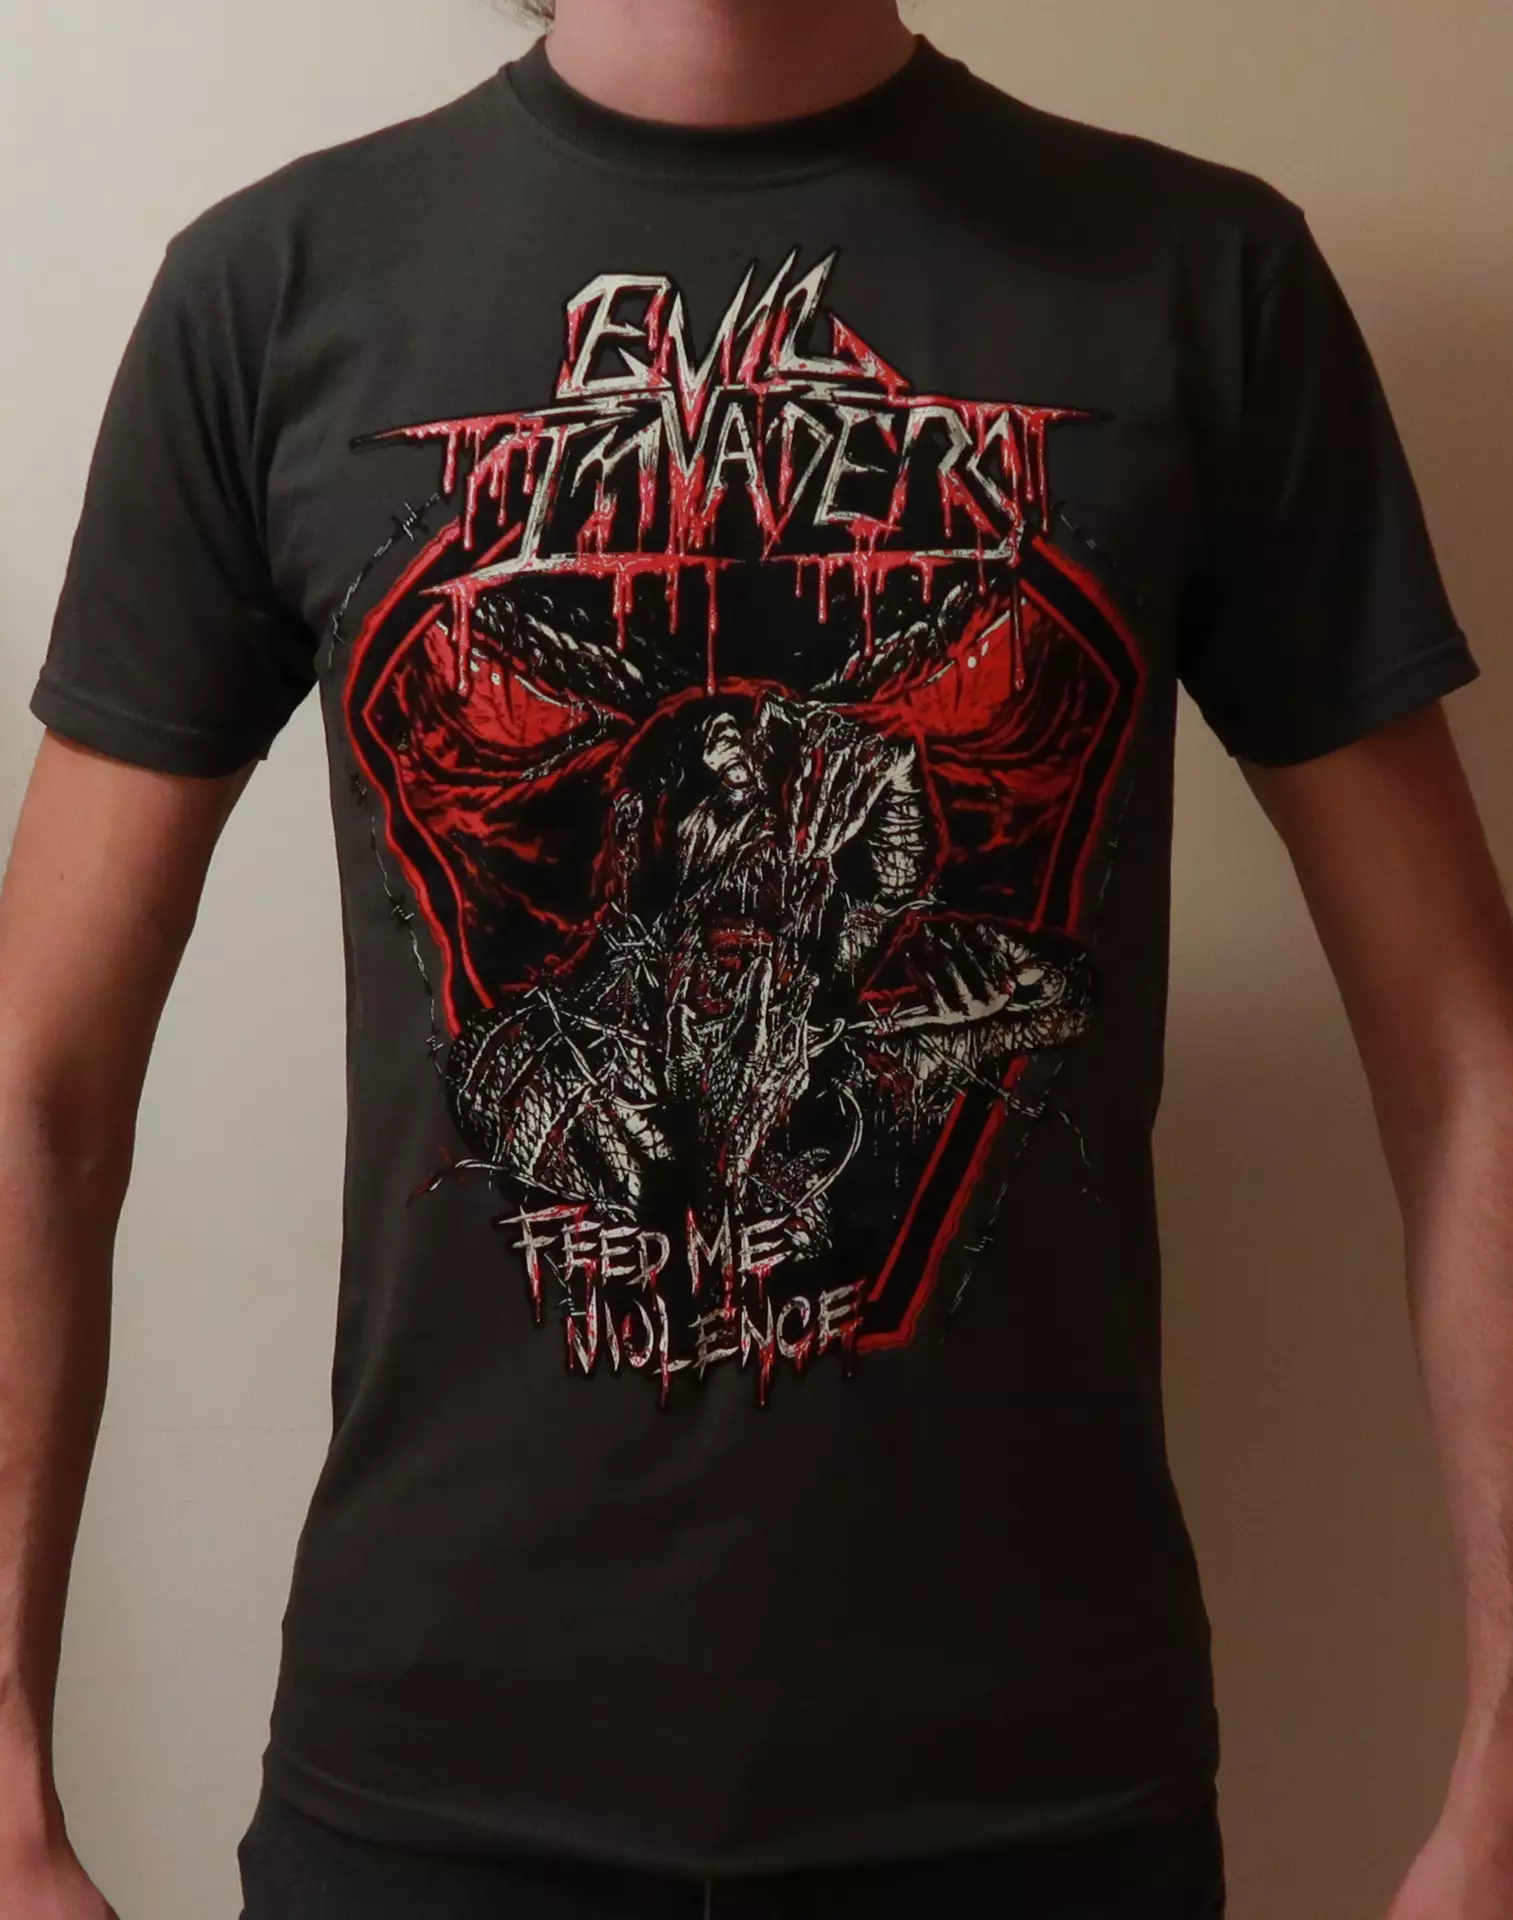 EVIL INVADERS - Feed Me Violence Grey Shirt